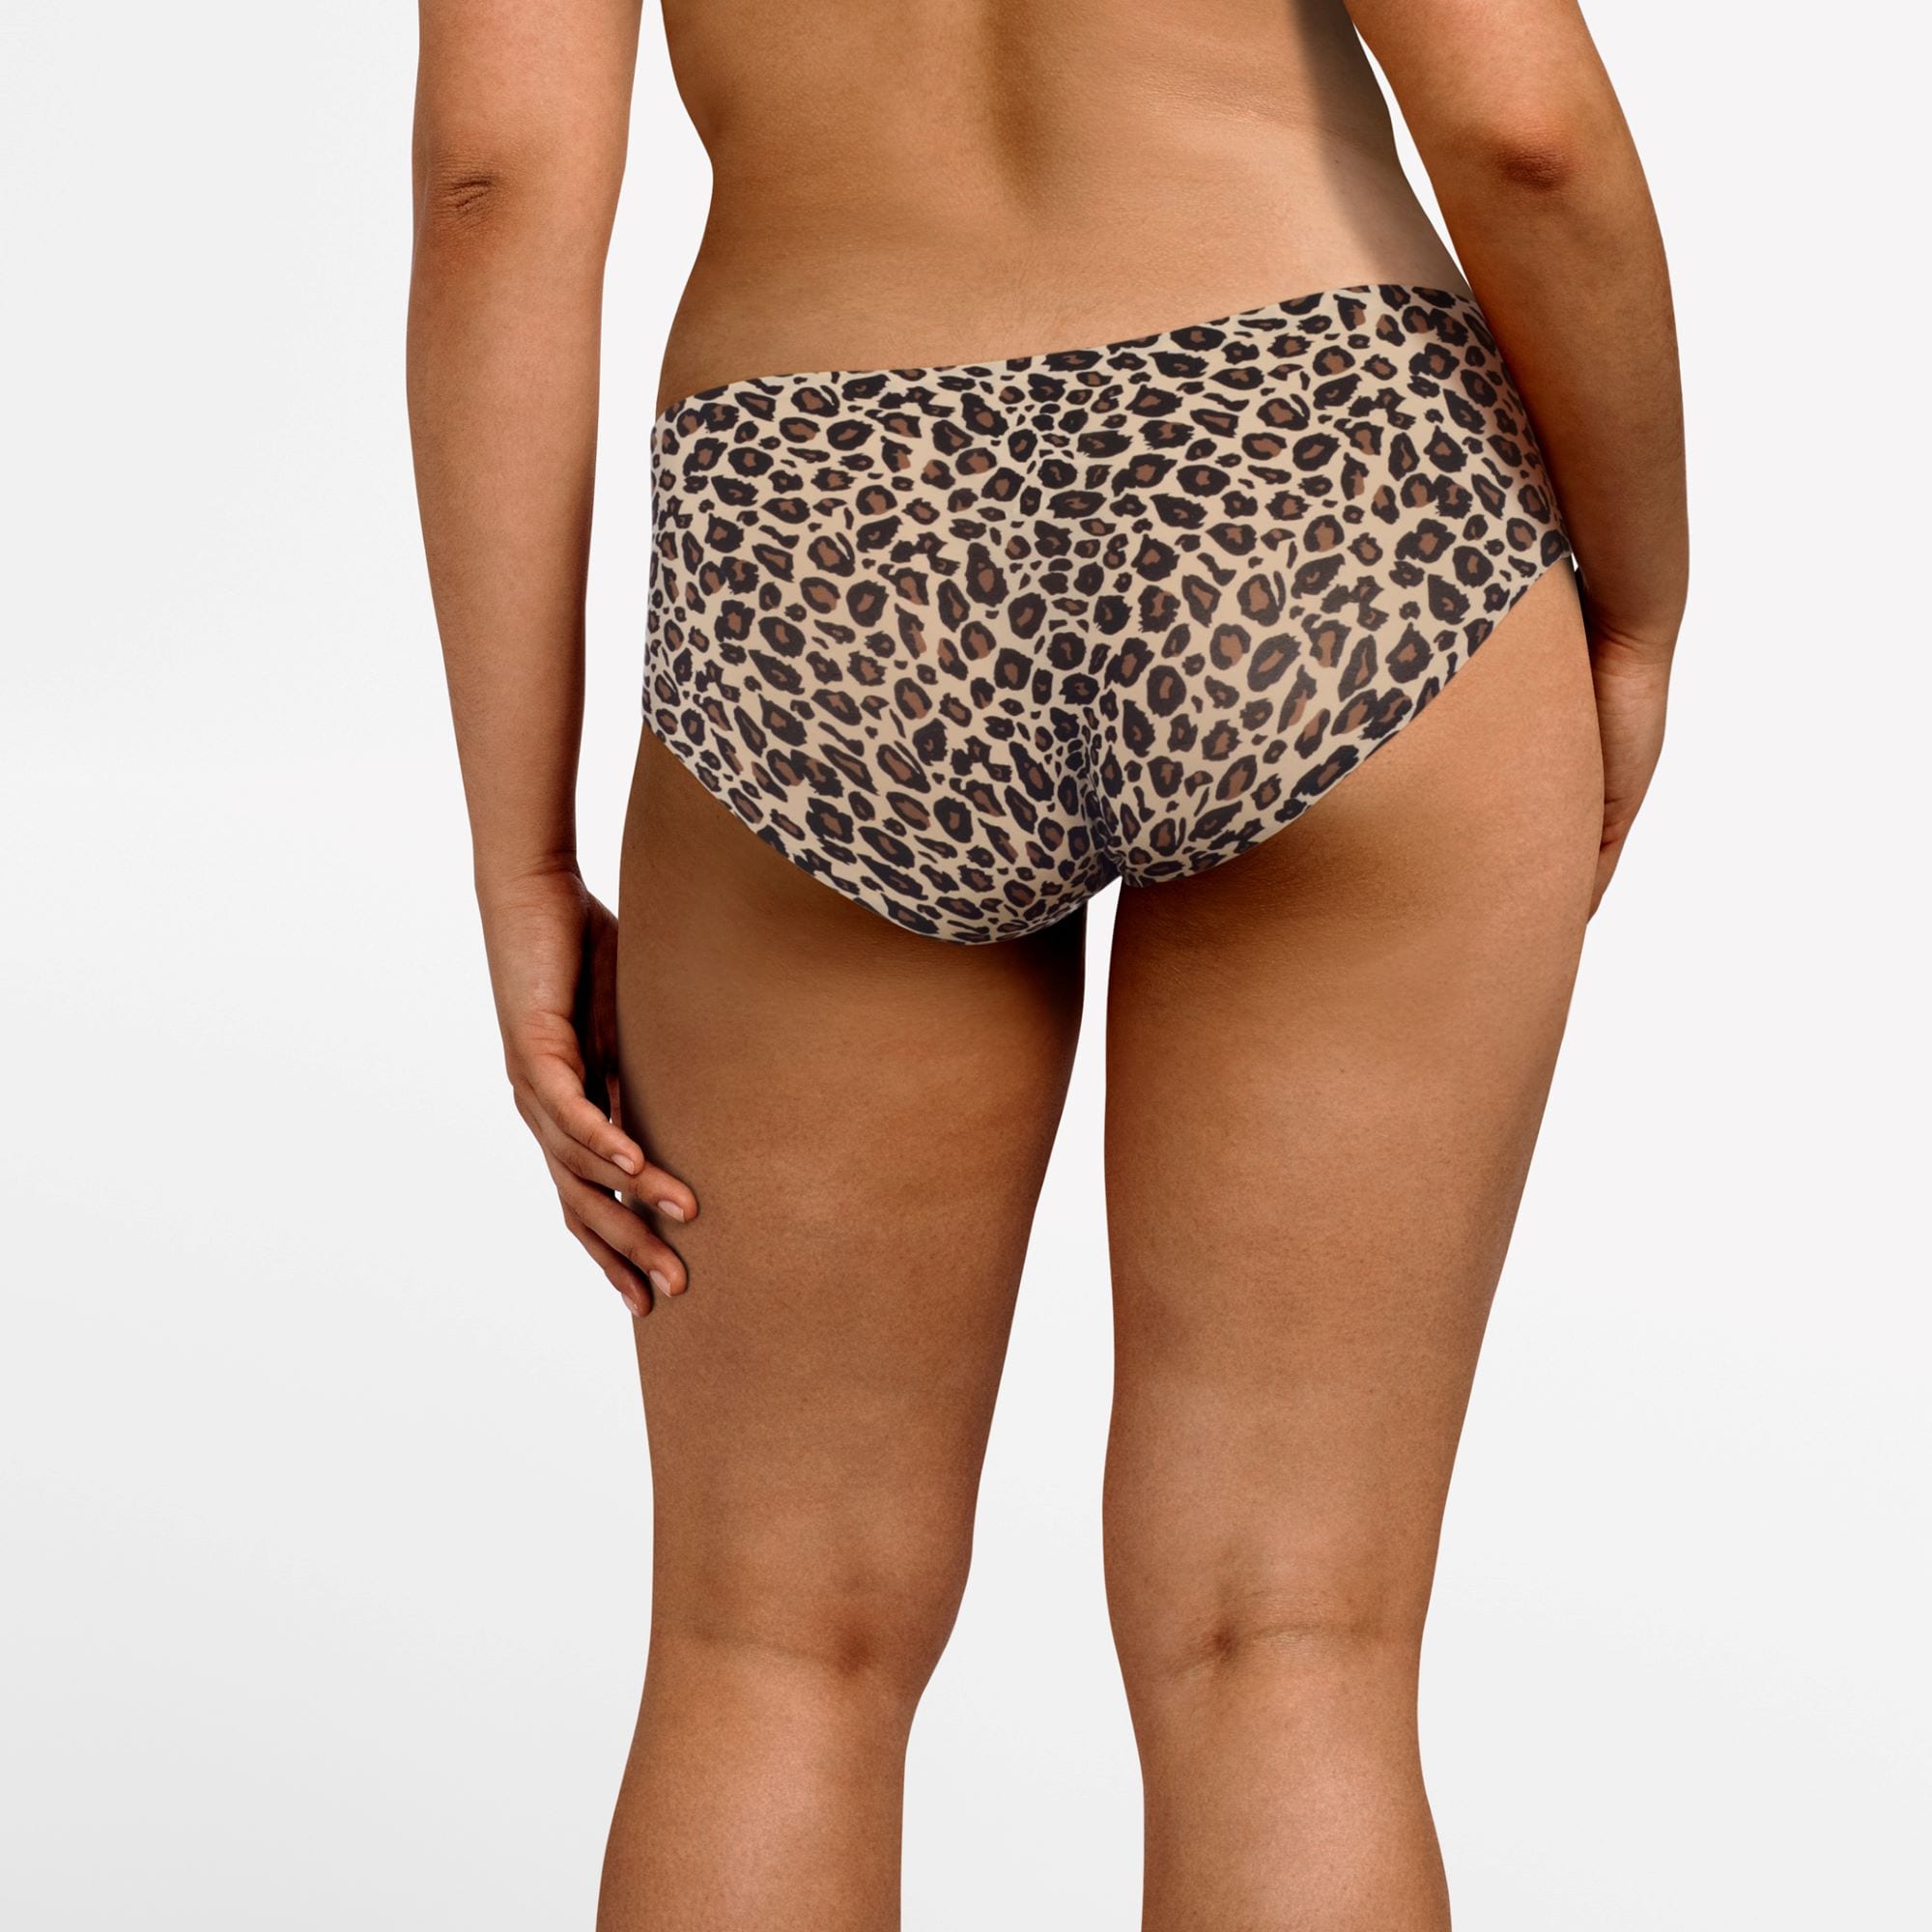 Blush Lingerie Hipster Panties - Leopard